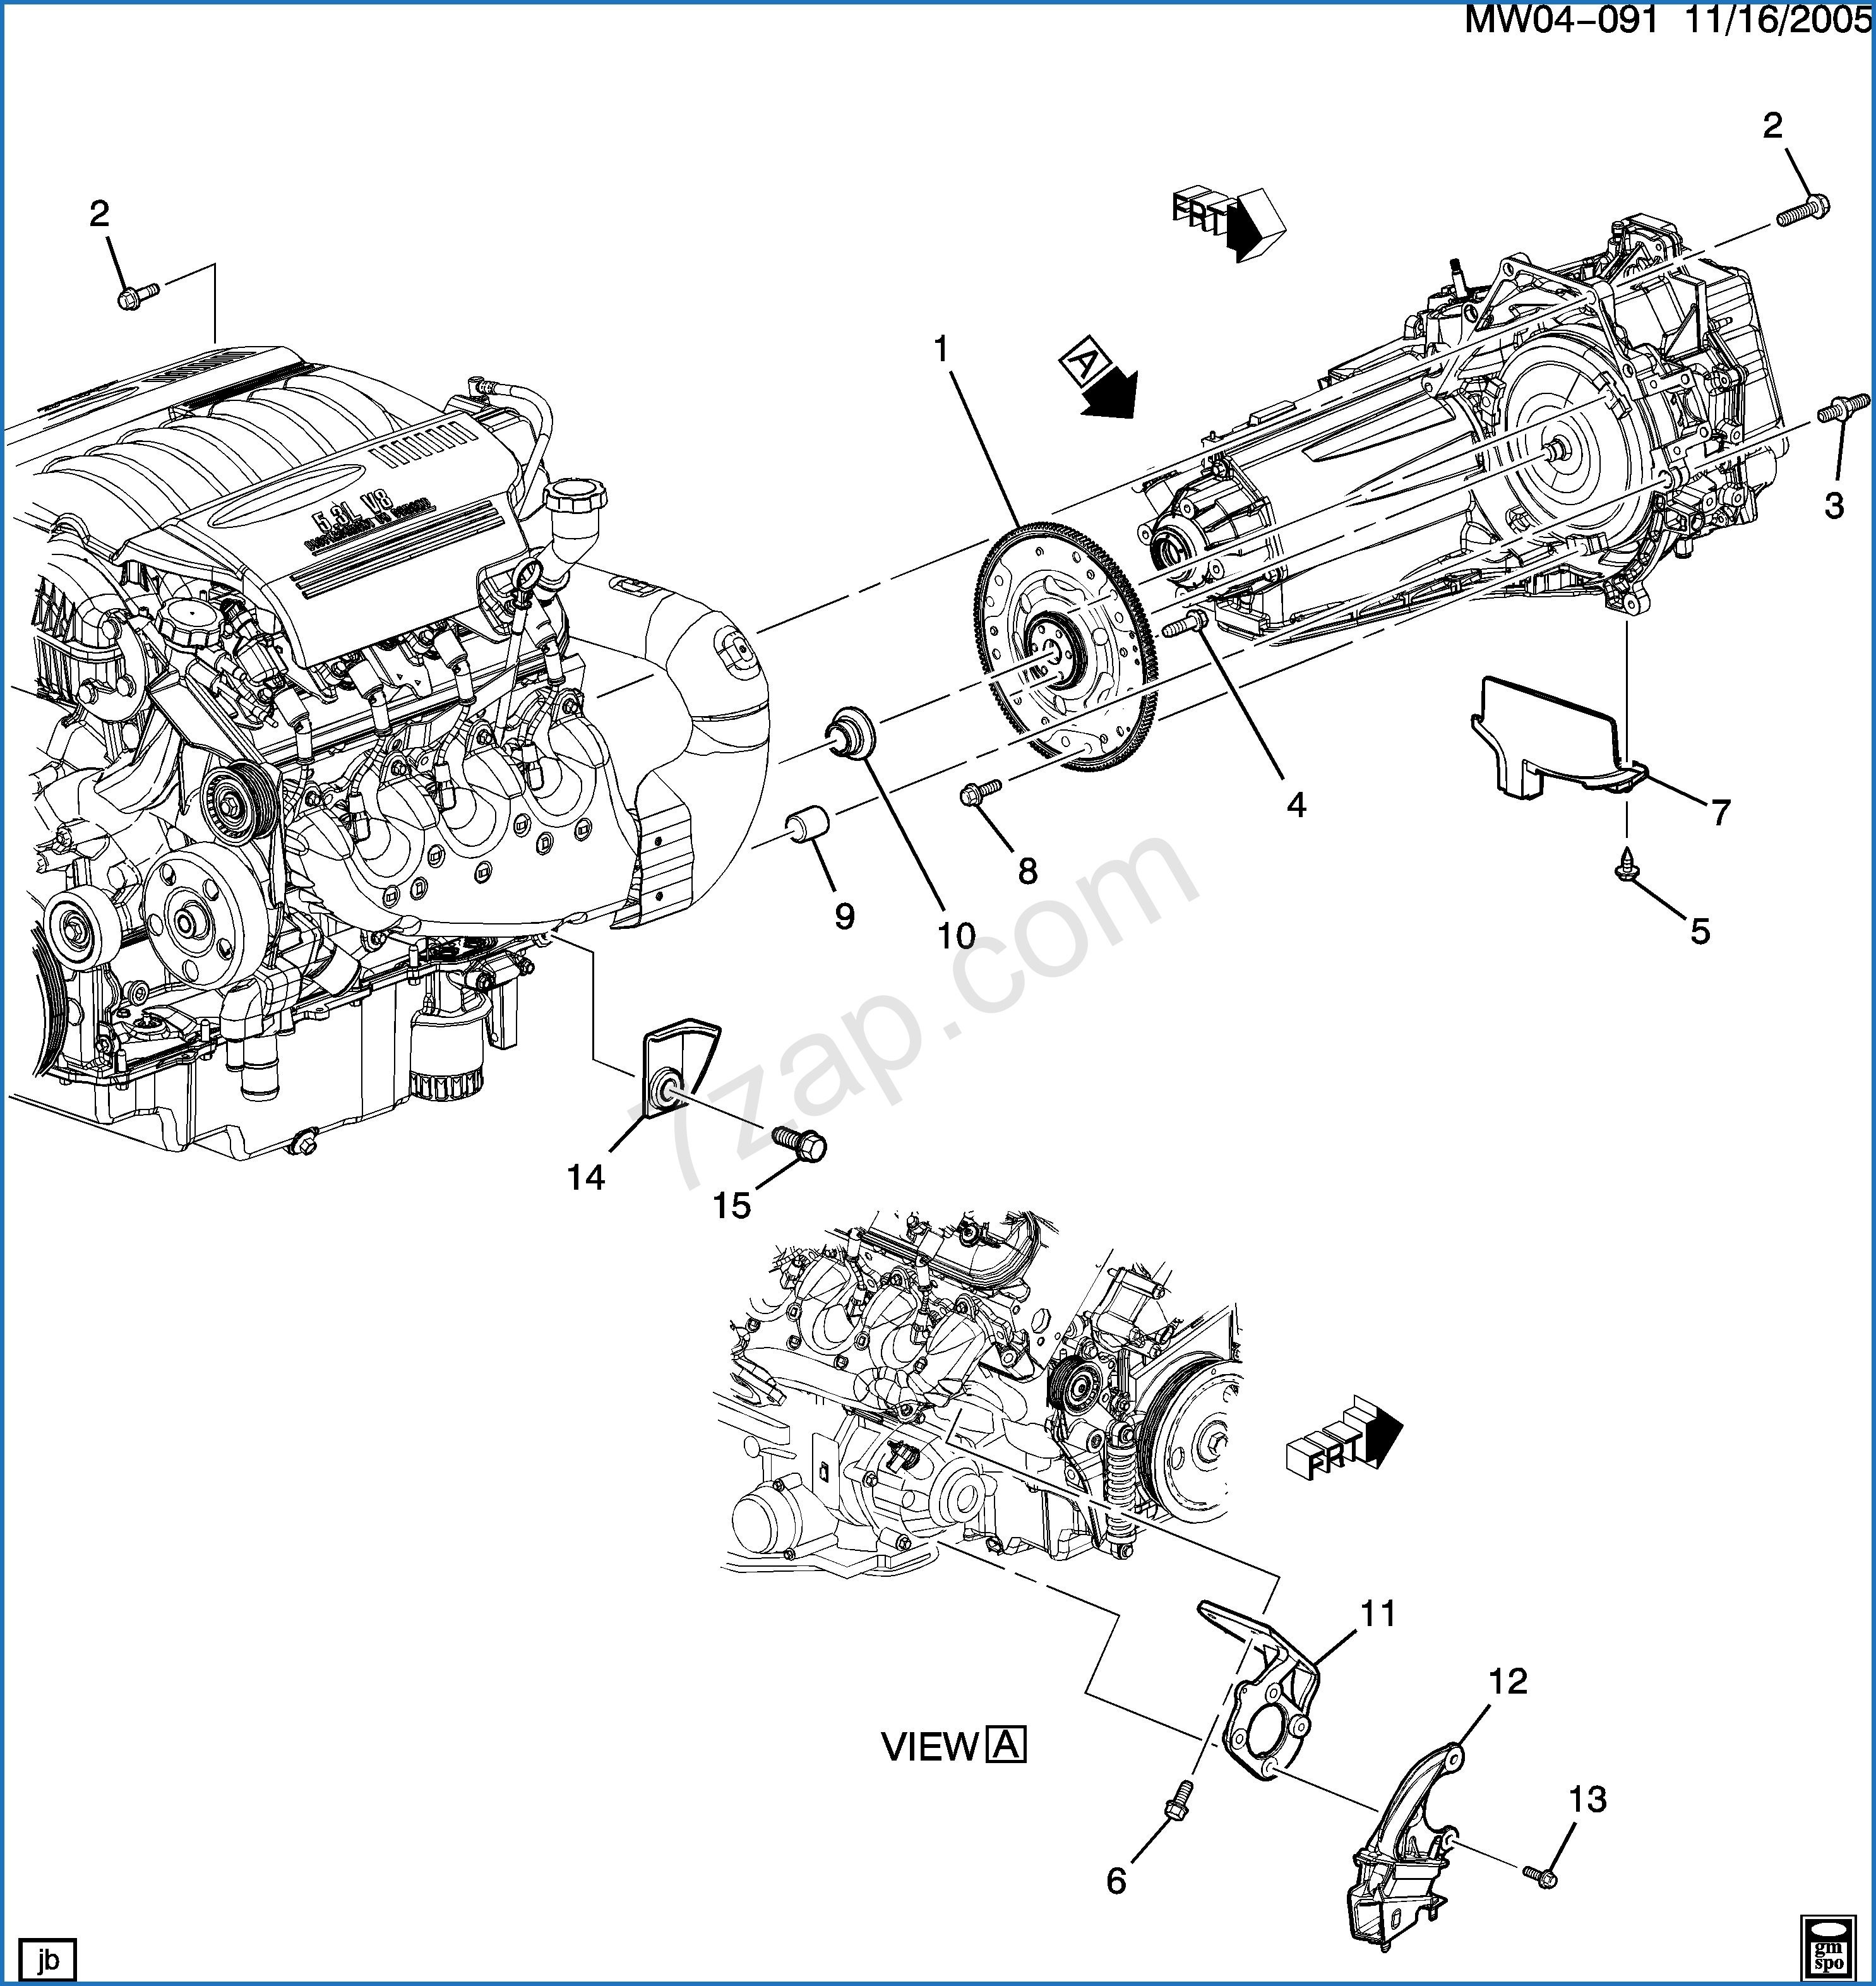 Auto Parts Diagram toyota Auto Transmission Diagram toyota Parts Catalog Beautiful Chevrolet Of Auto Parts Diagram toyota